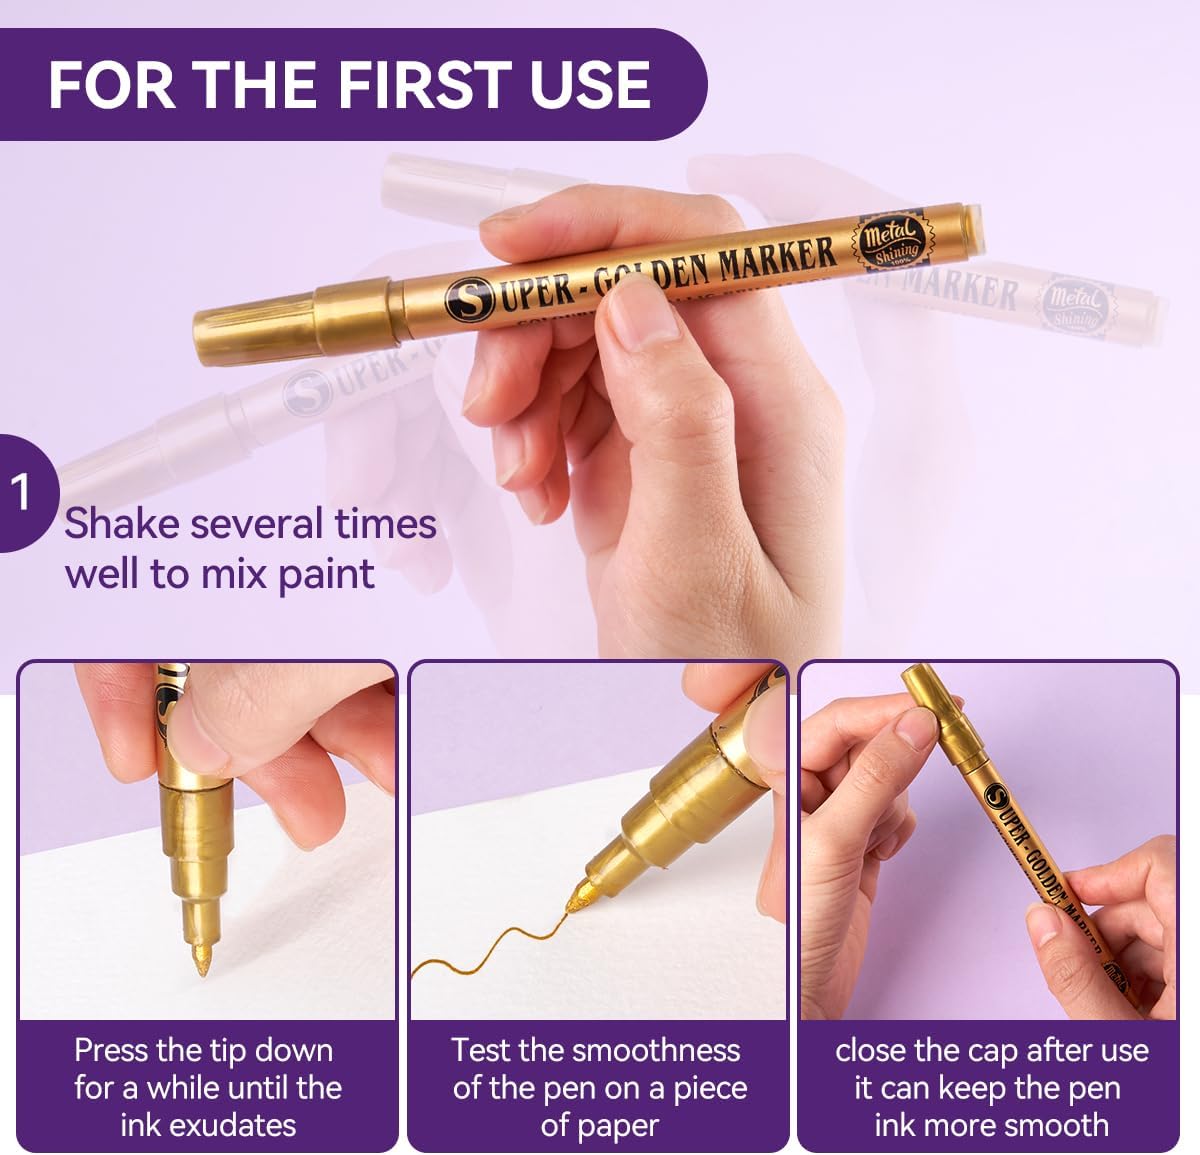 12 Color Super Golden Metallic Paint Marker Pens,Ultra Fine Point 0.7mm - TTpen